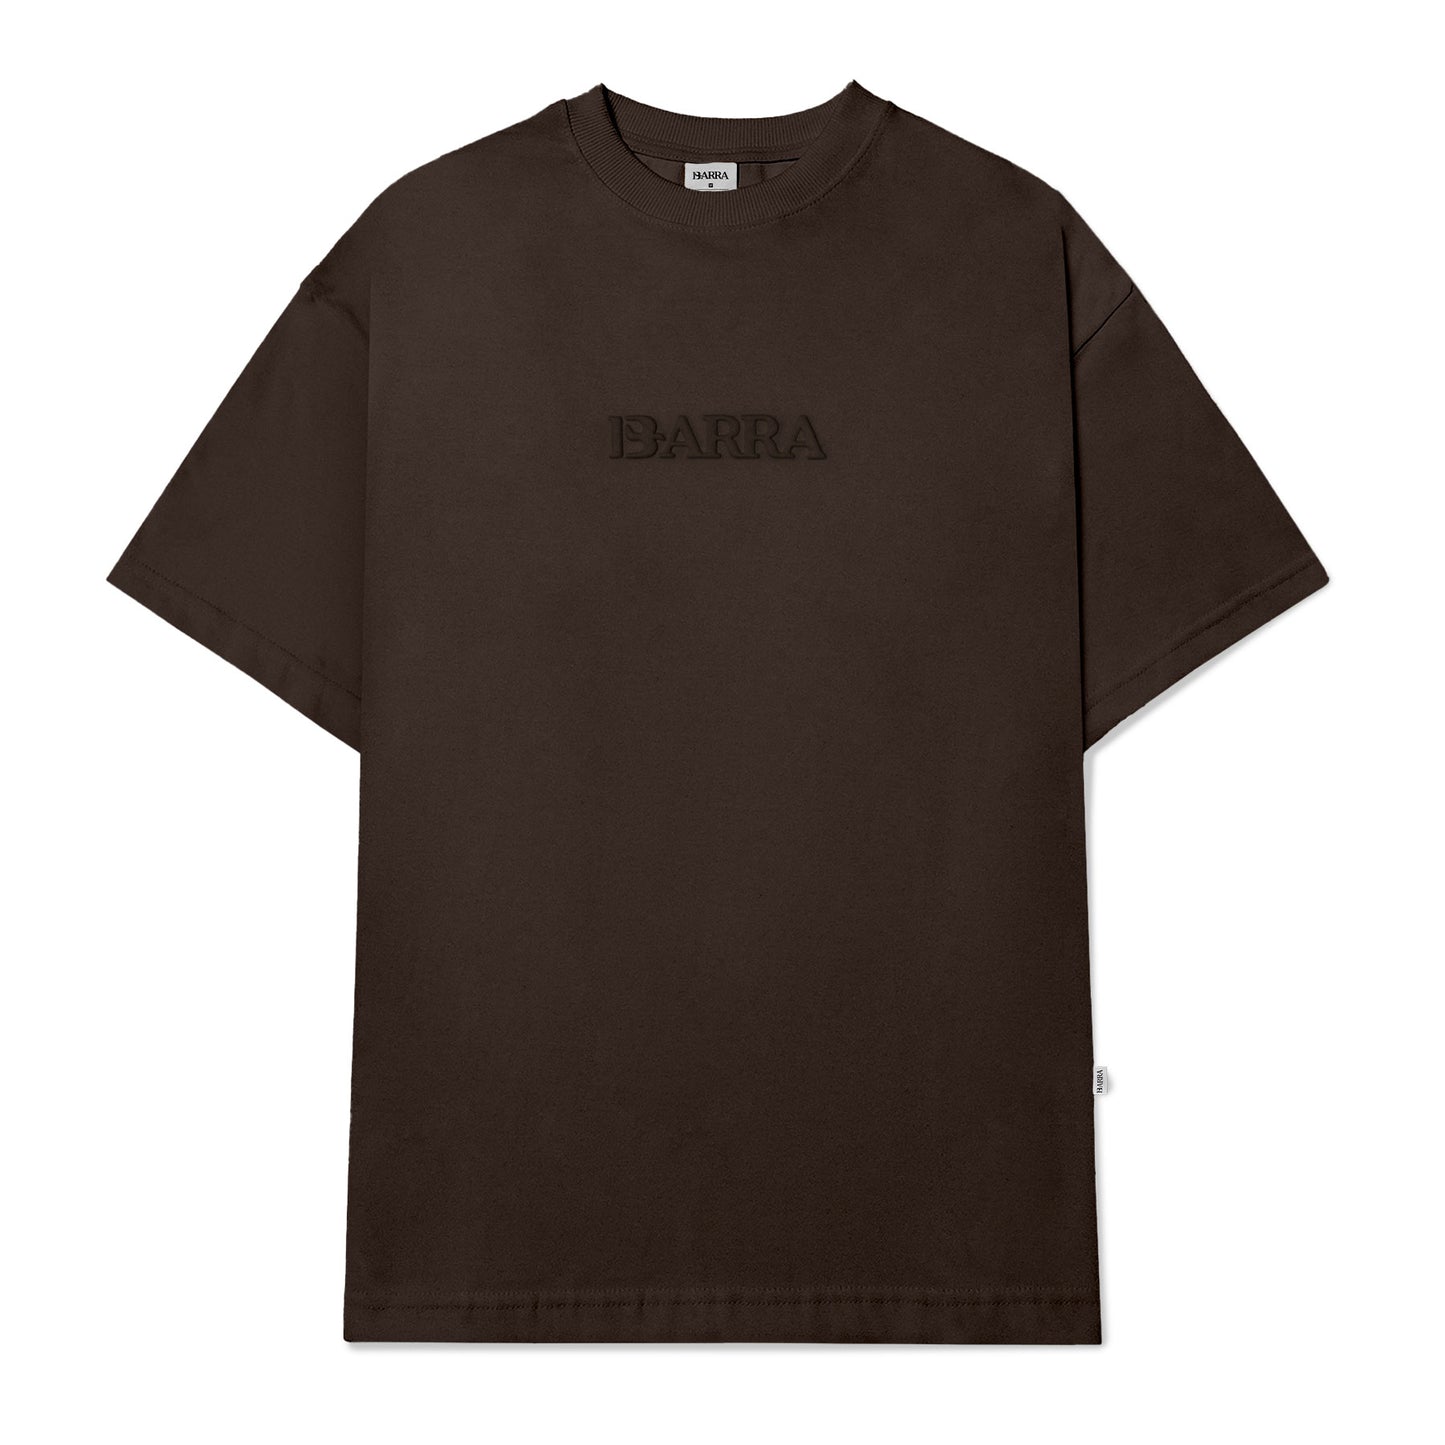 Barra Crew - Camiseta Barra Alto Relevo Marrom